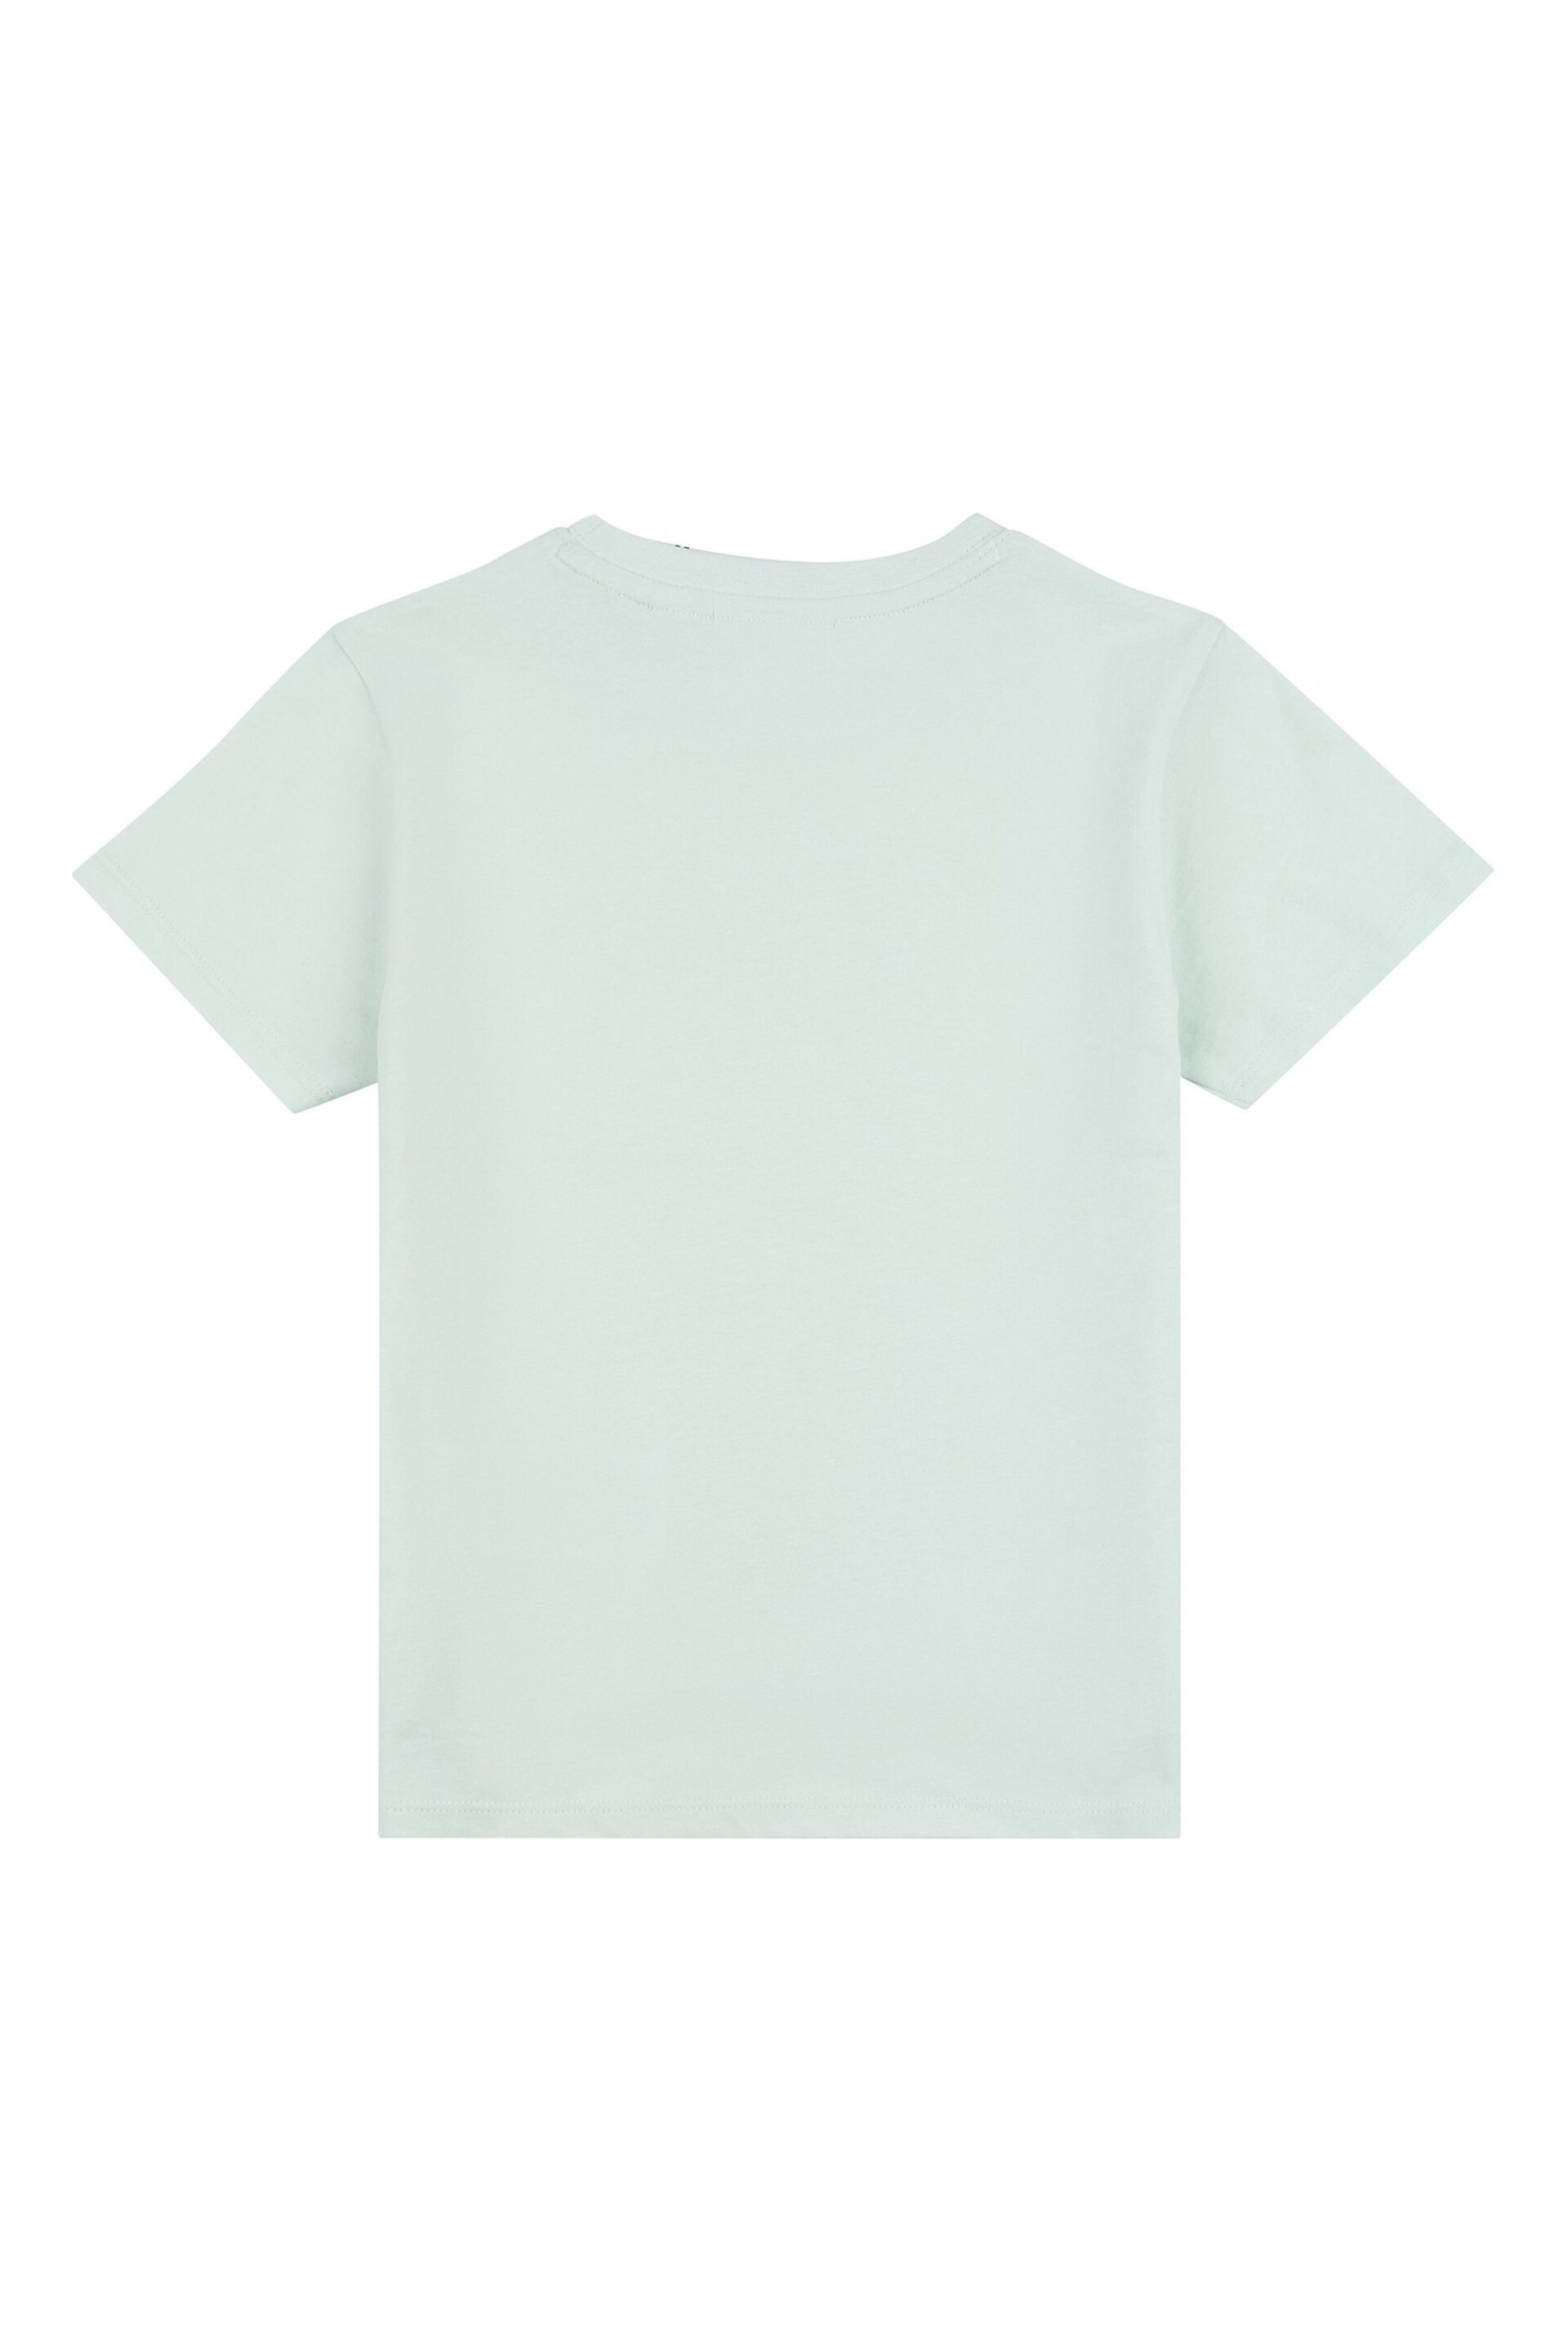 Juicy Couture Girls Tonal White T-Shirt - Image 2 of 3